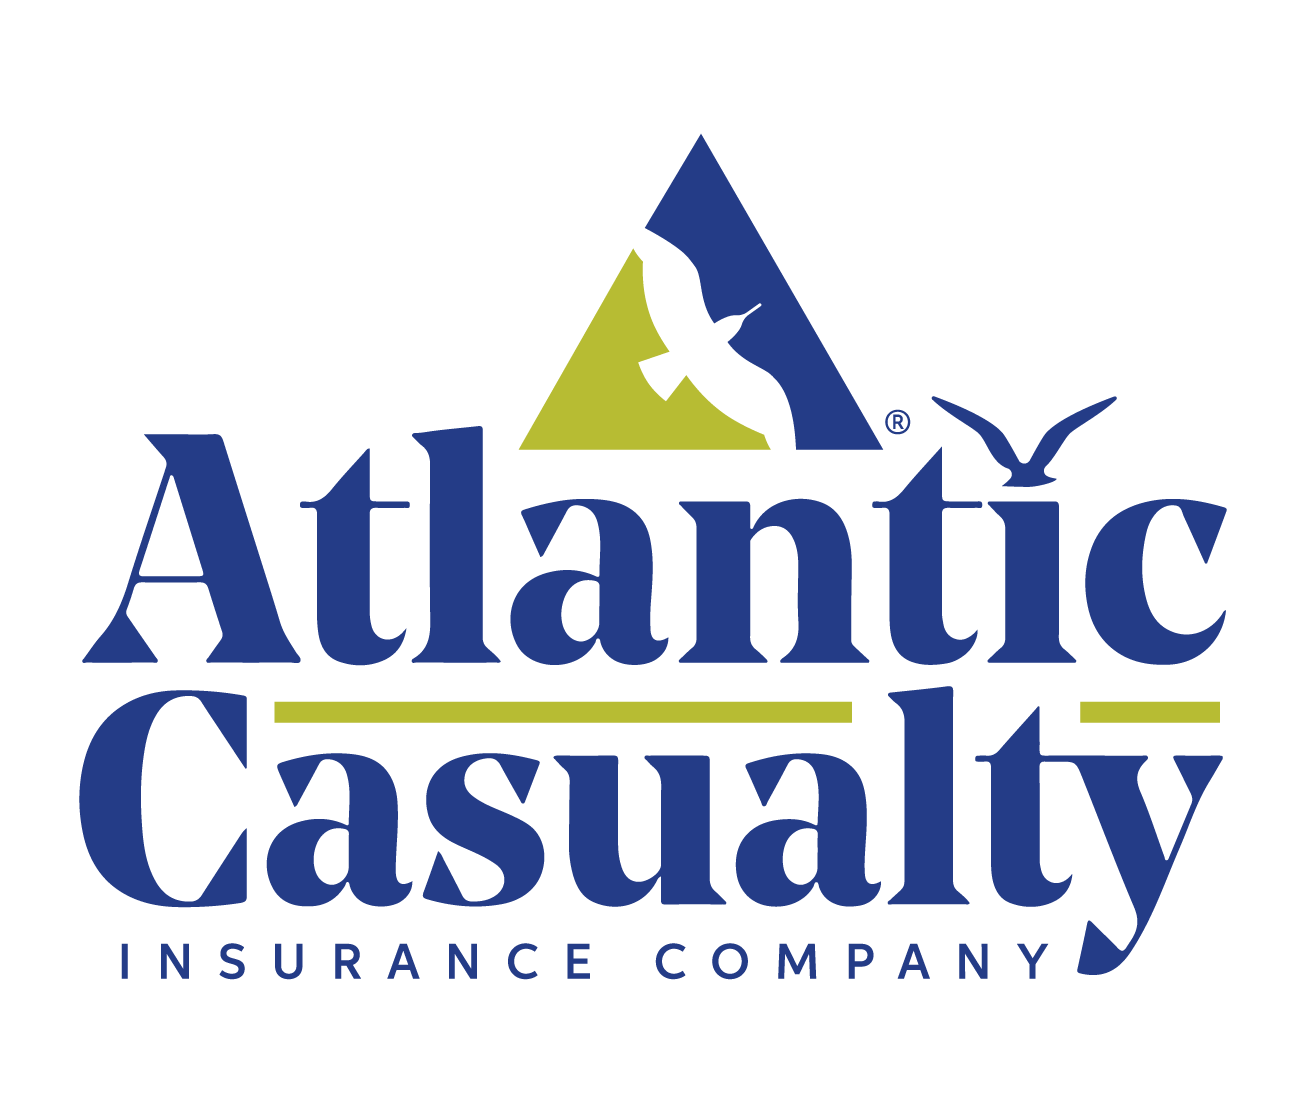 Atlantic Casualty Insurance